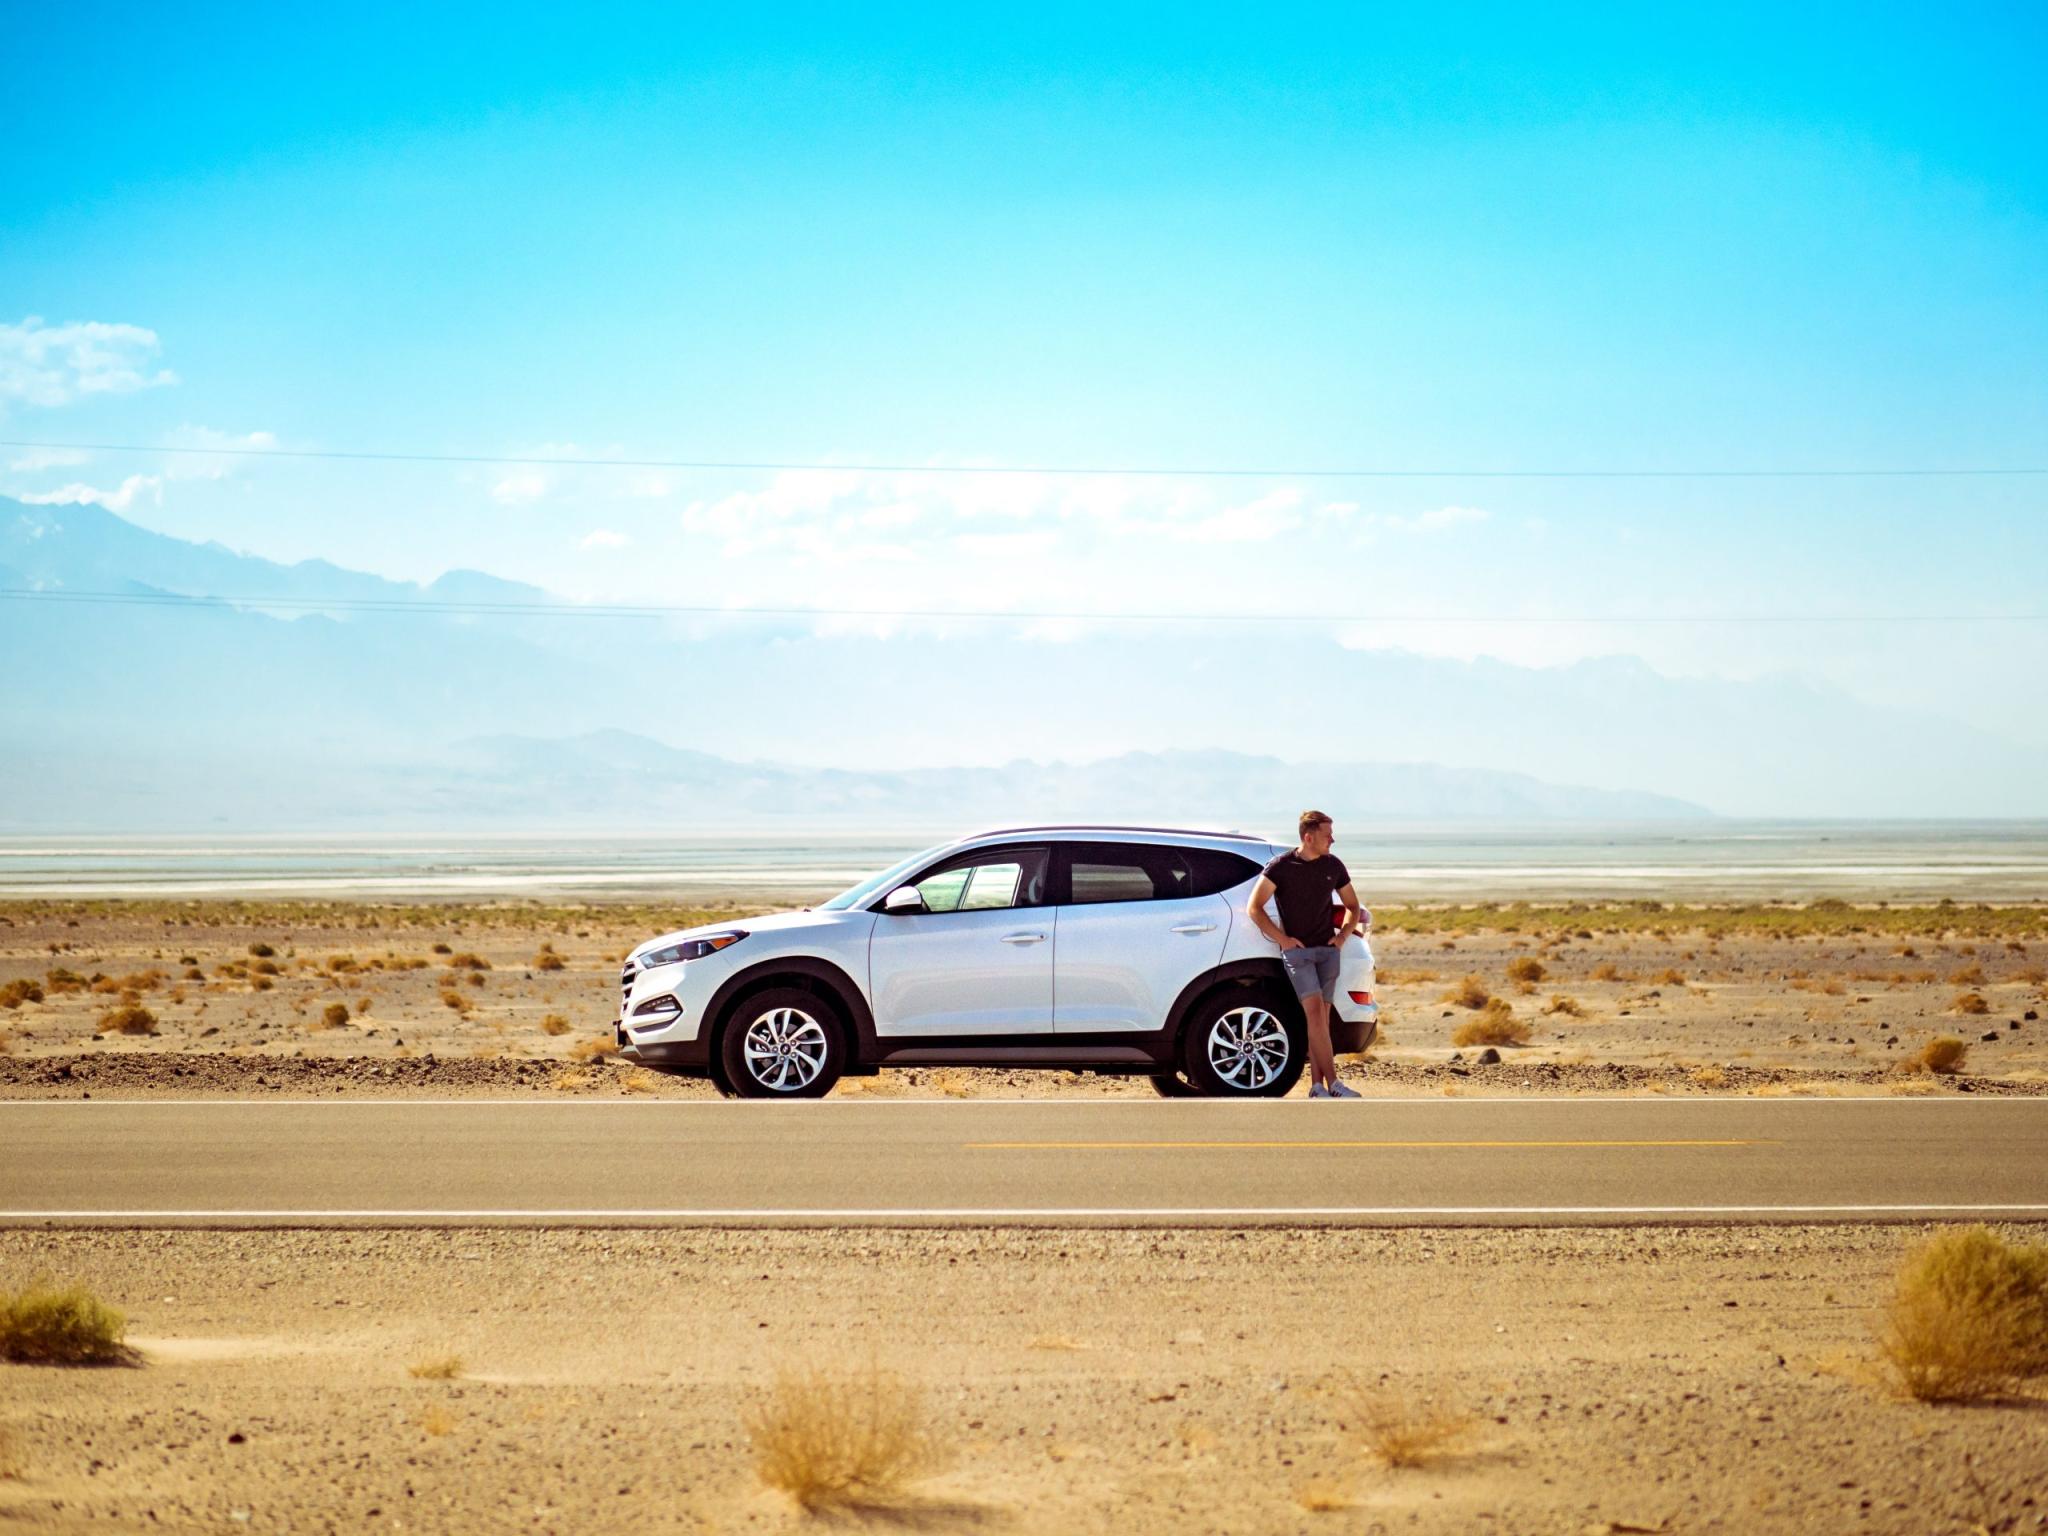 Hyundai Tucson in the desert trip